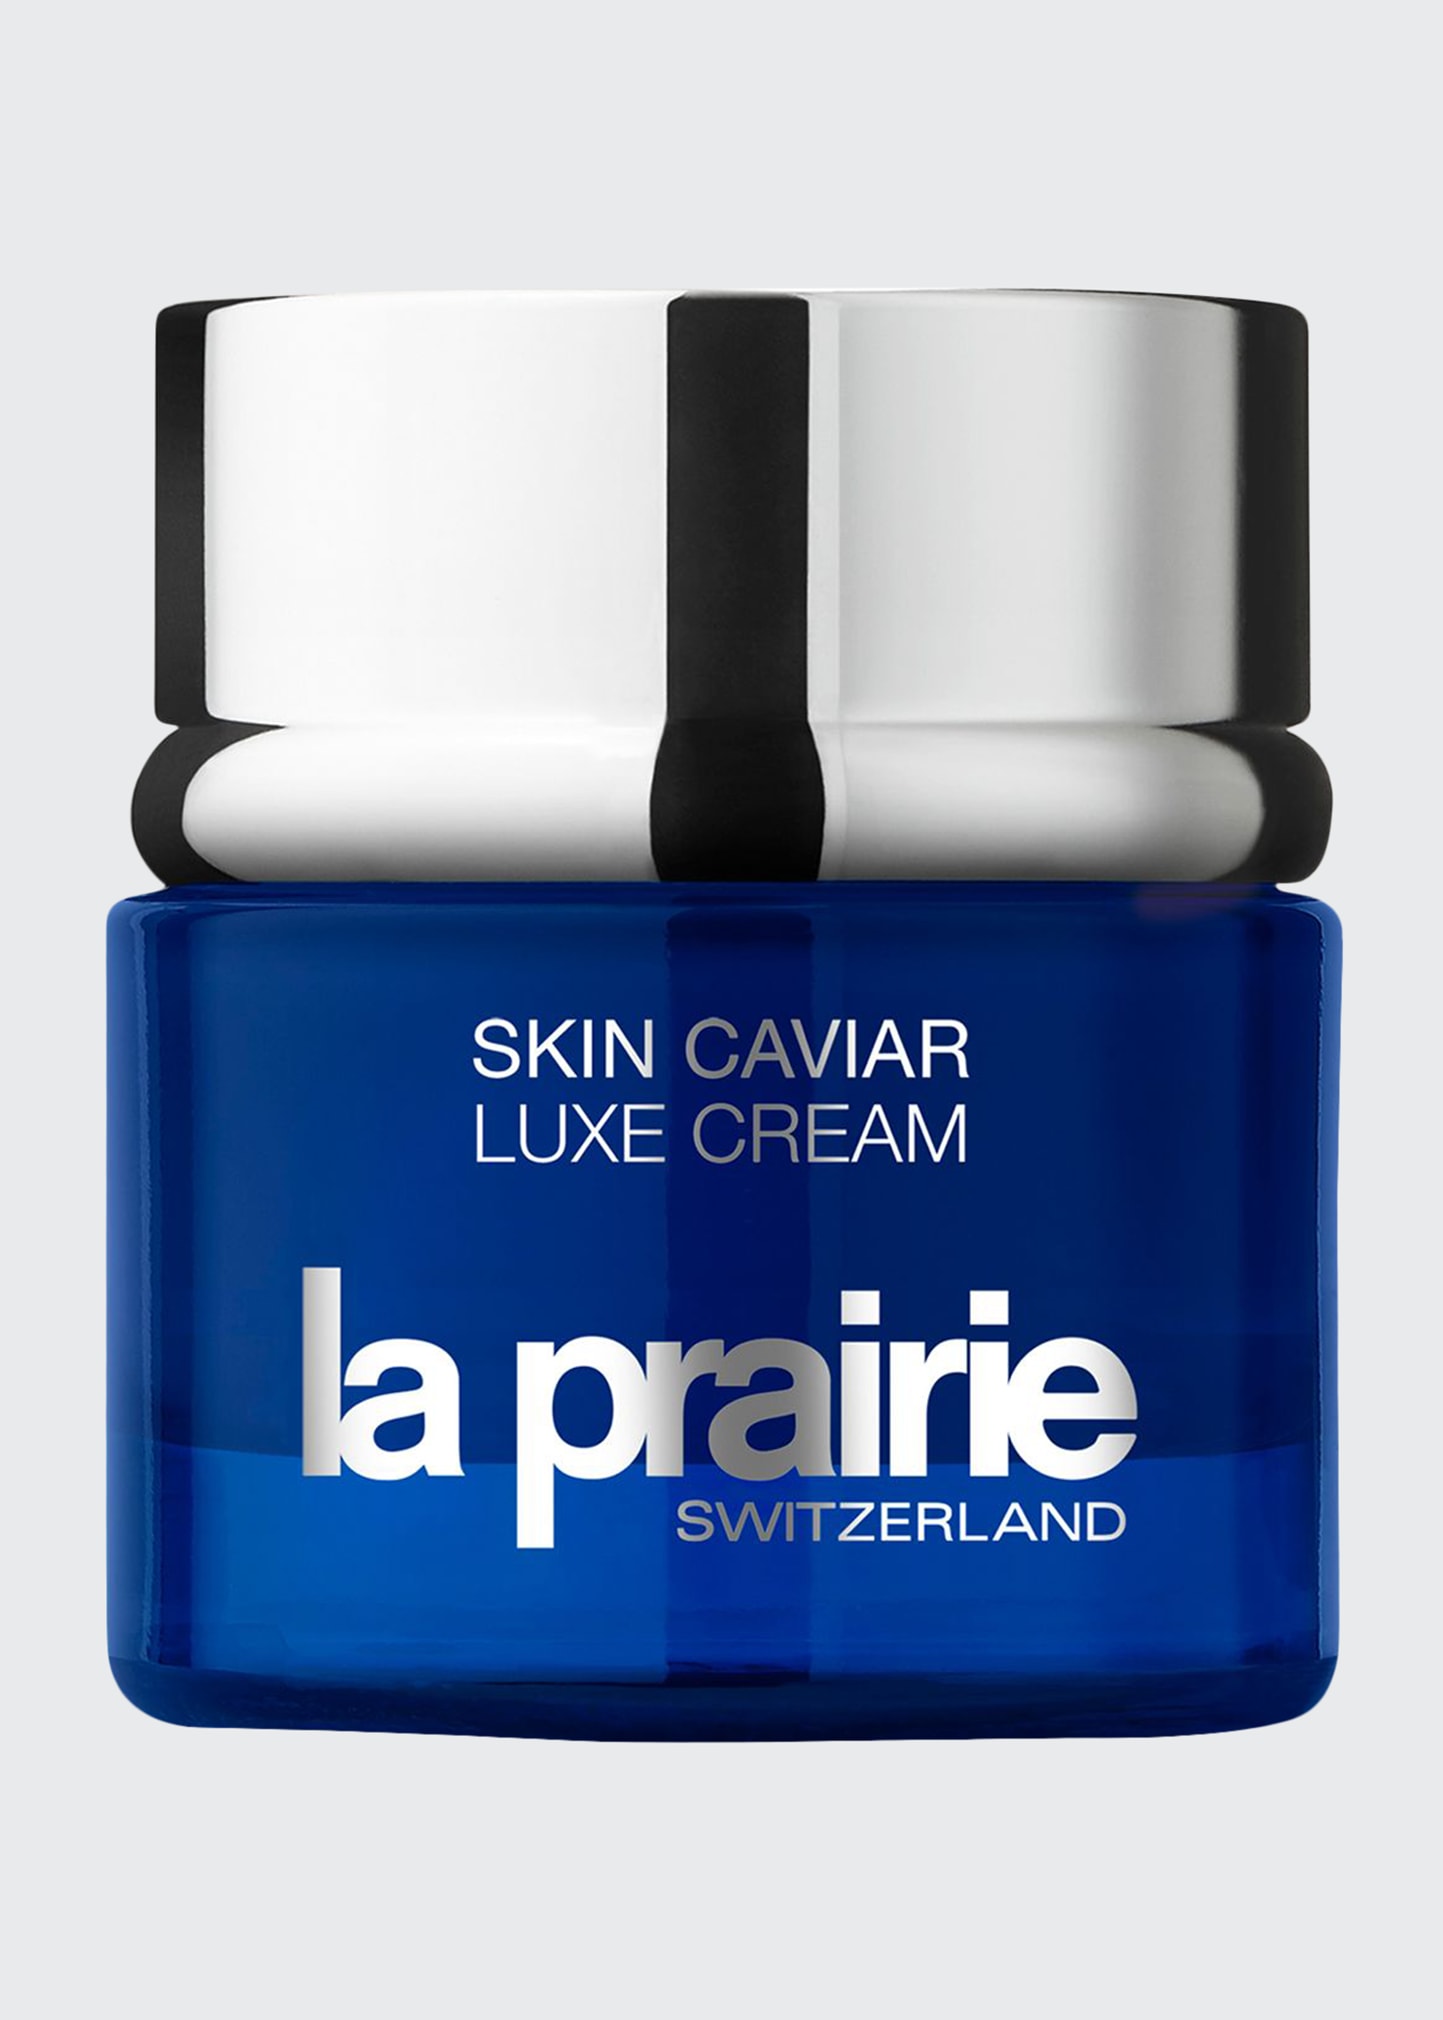 Skin Caviar Luxe Cream, 3.4 oz.